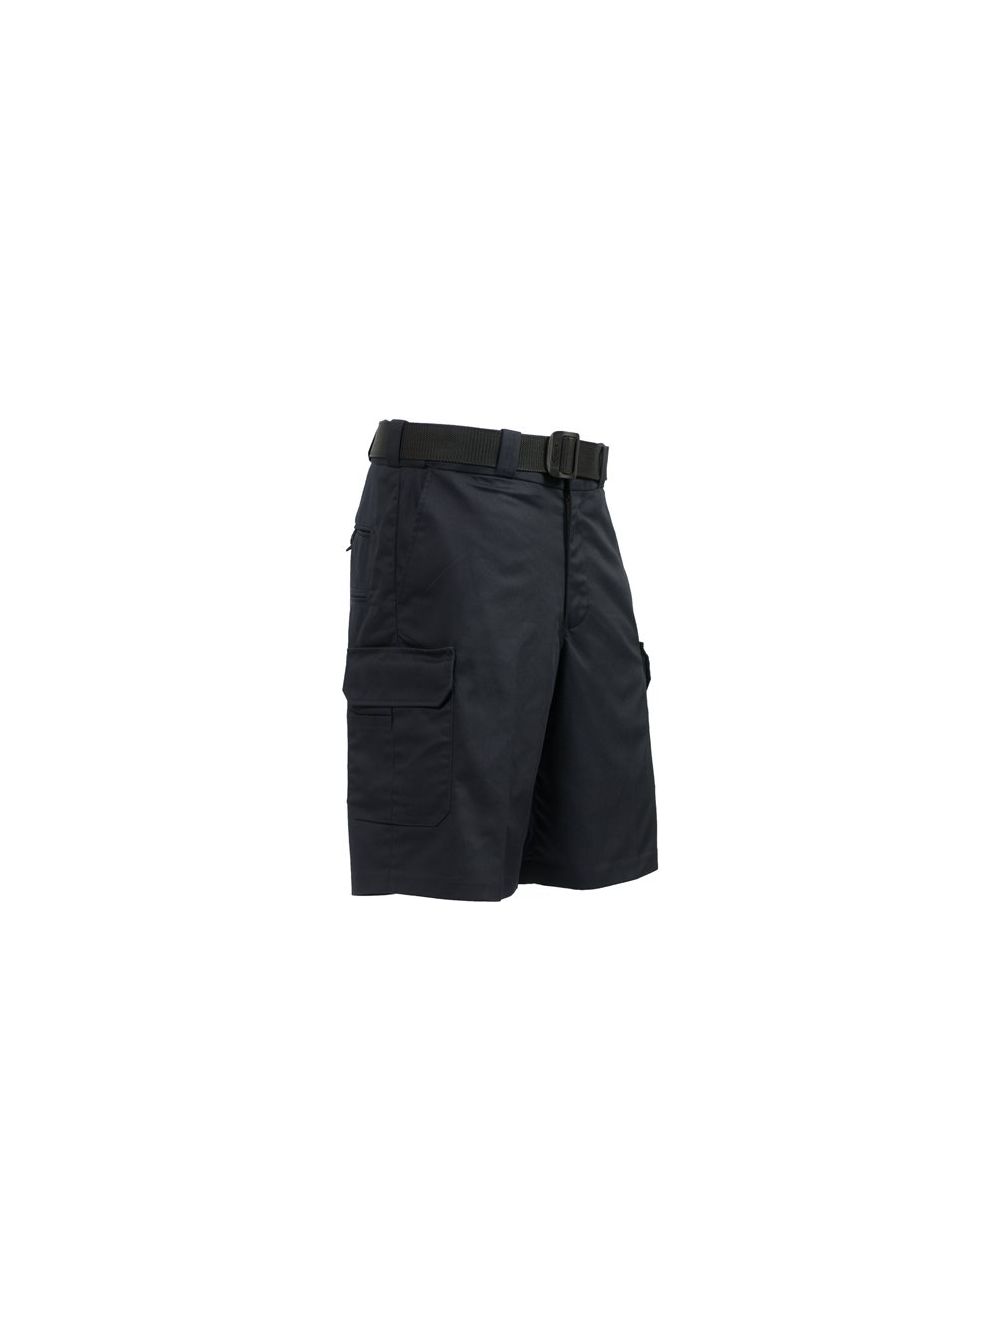 Men's Tek3 Cargo Shorts